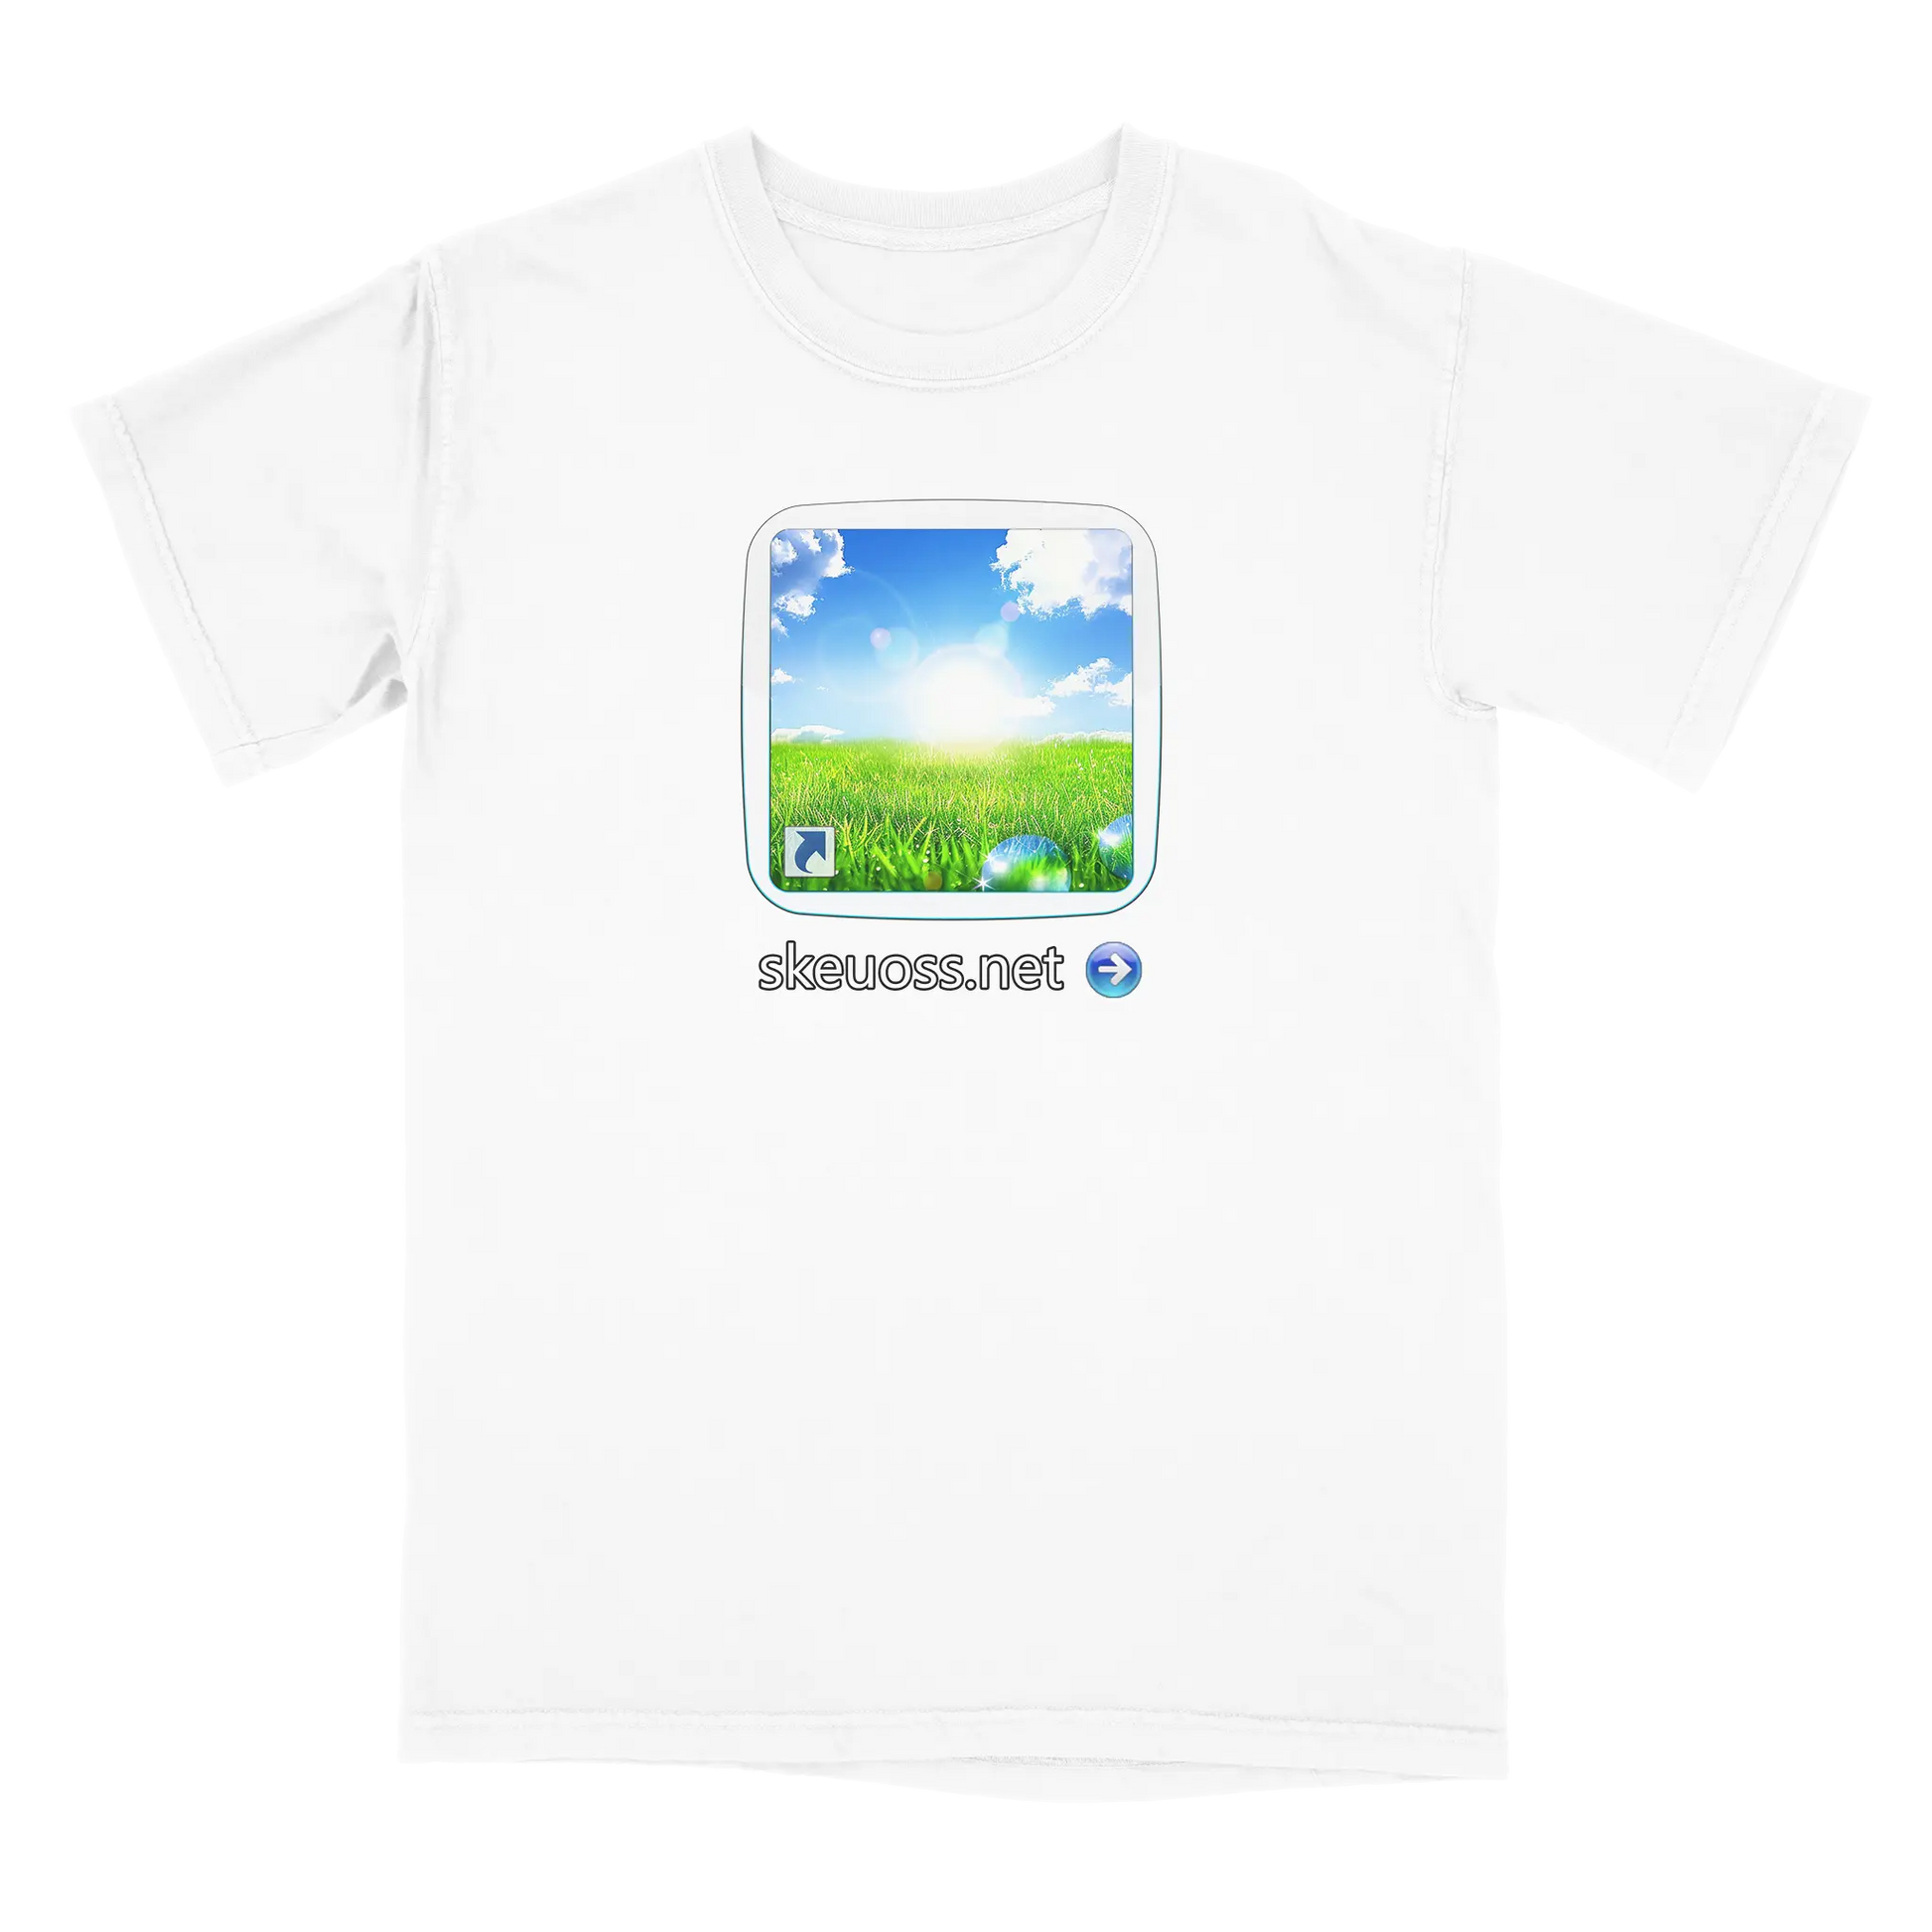 Frutiger Aero T-shirt - User Login Collection - User 278